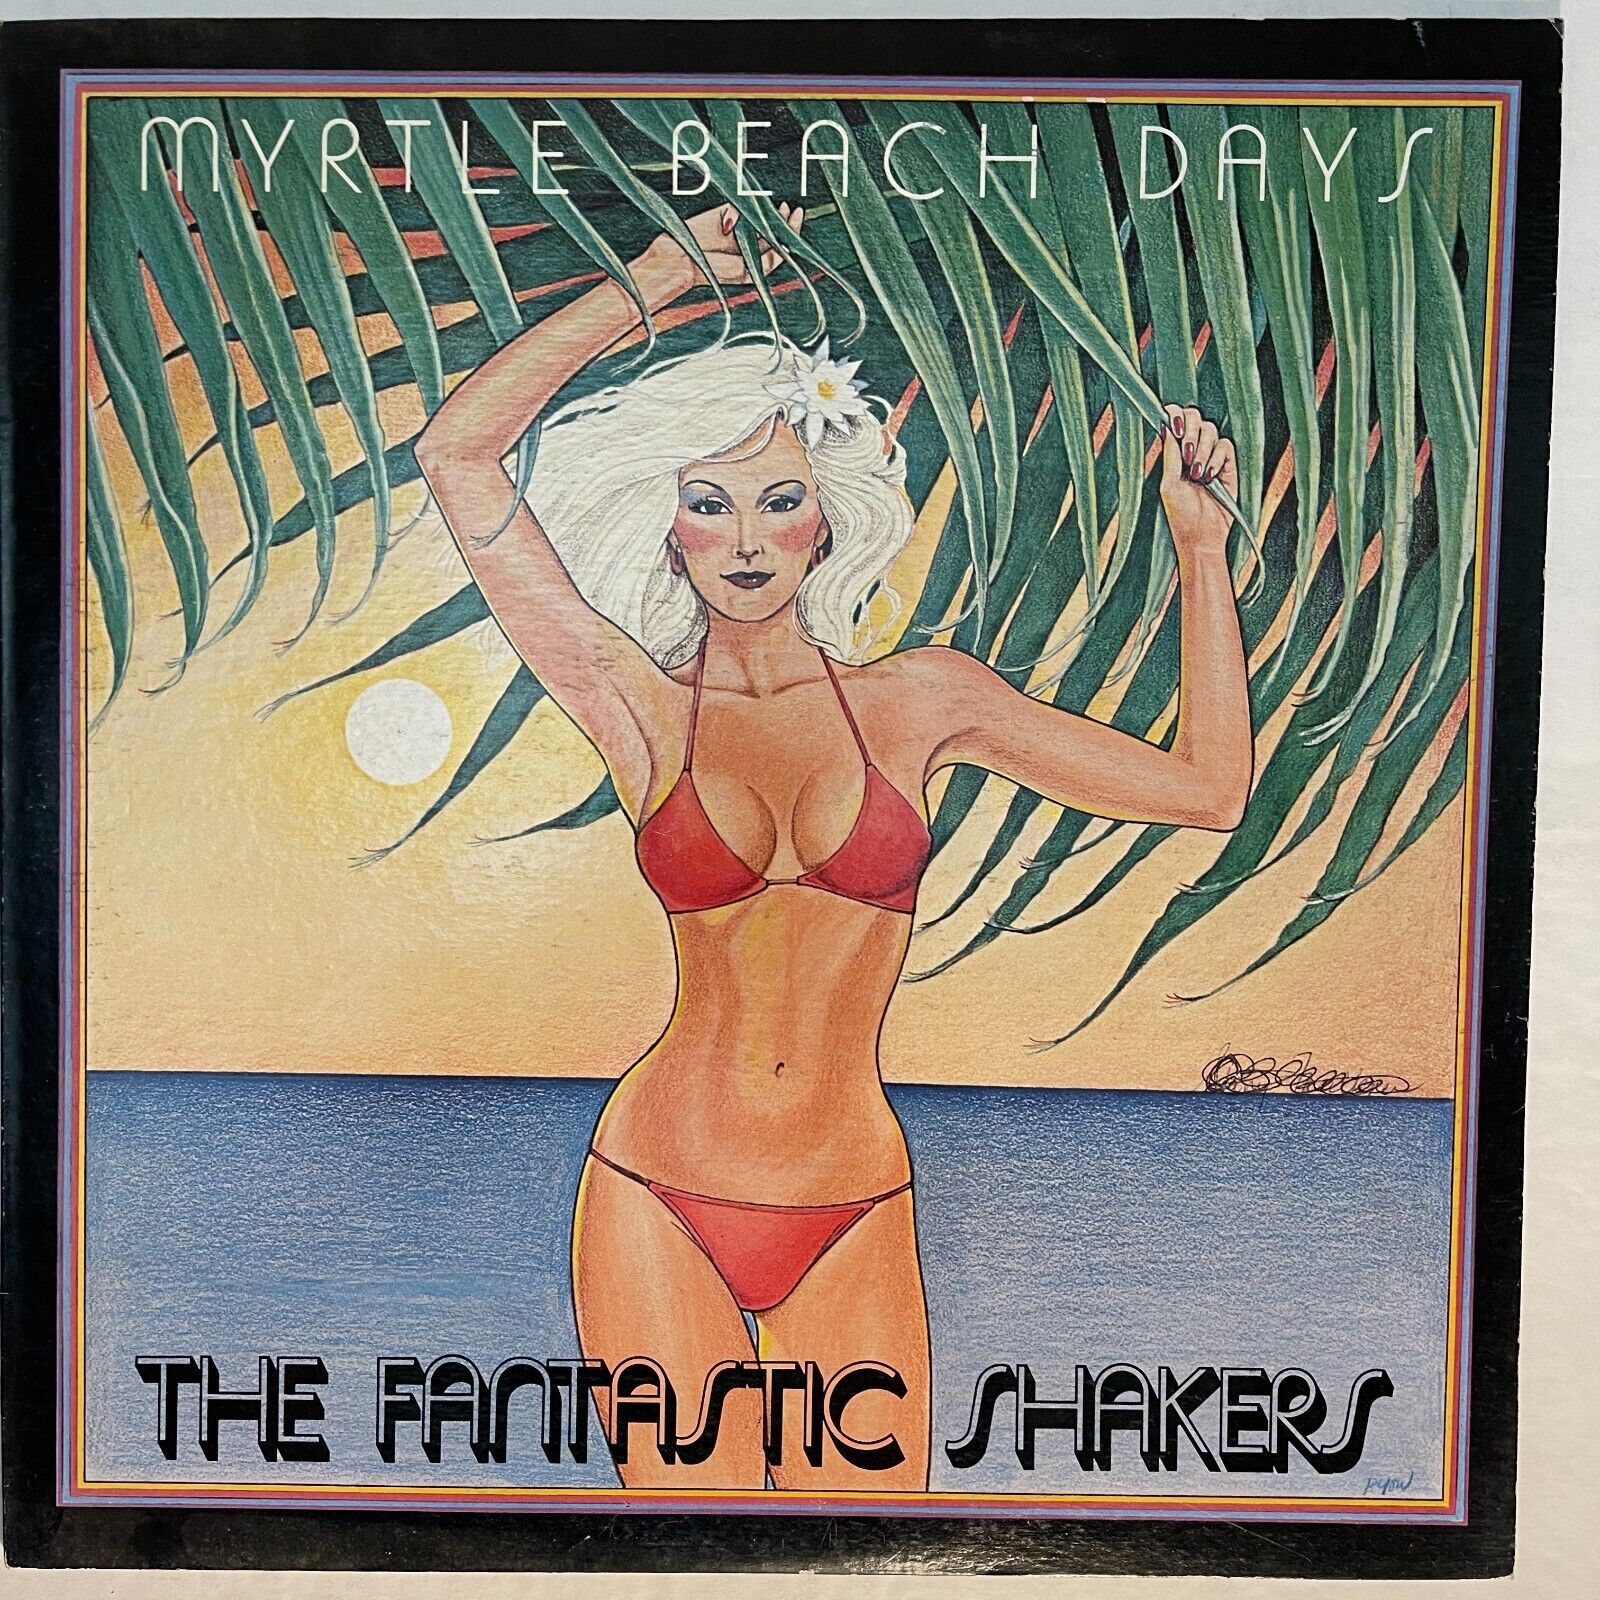 The Fantastic Shakers ‎– Myrtle Beach Days Vinyl, LP Beach Music